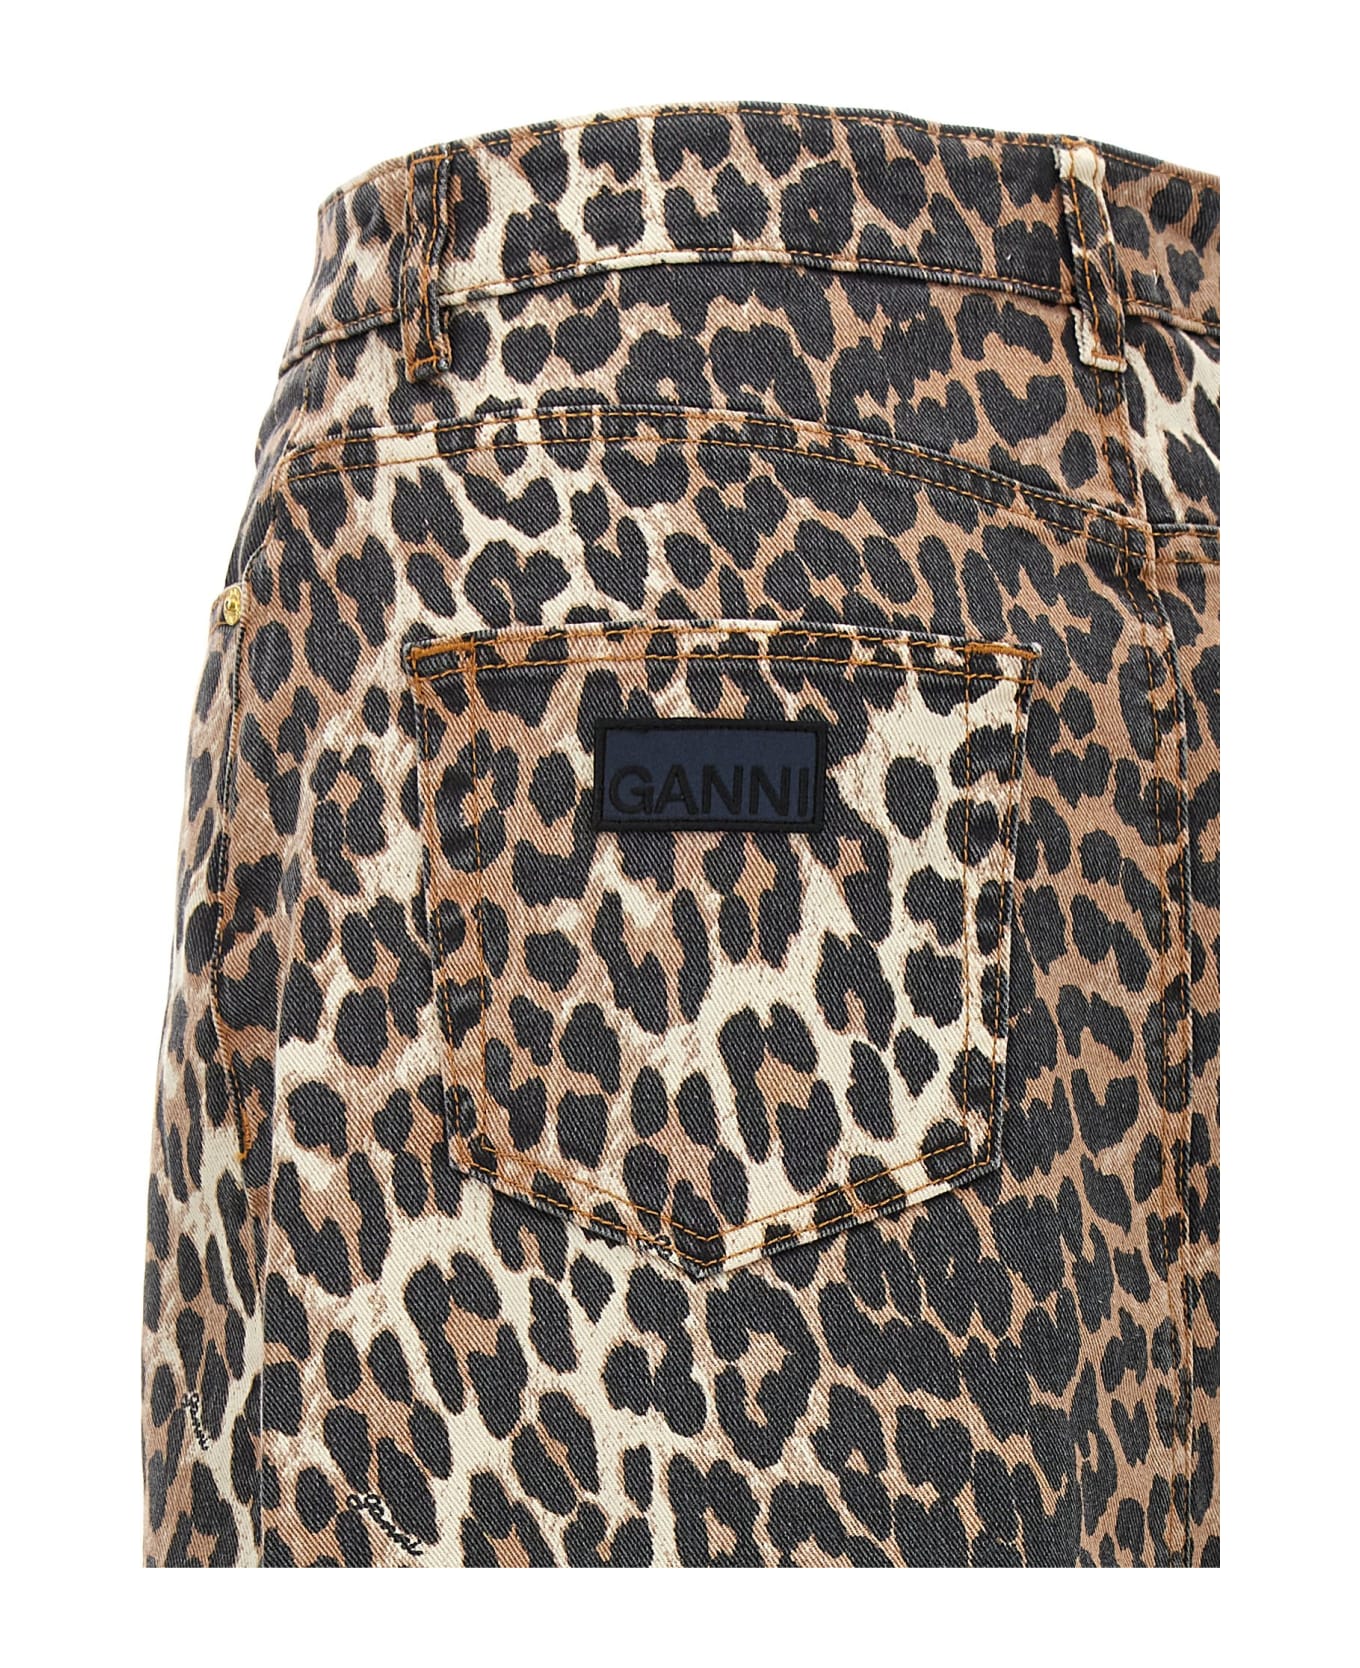 Ganni Animal Print Long Skirt - leopard